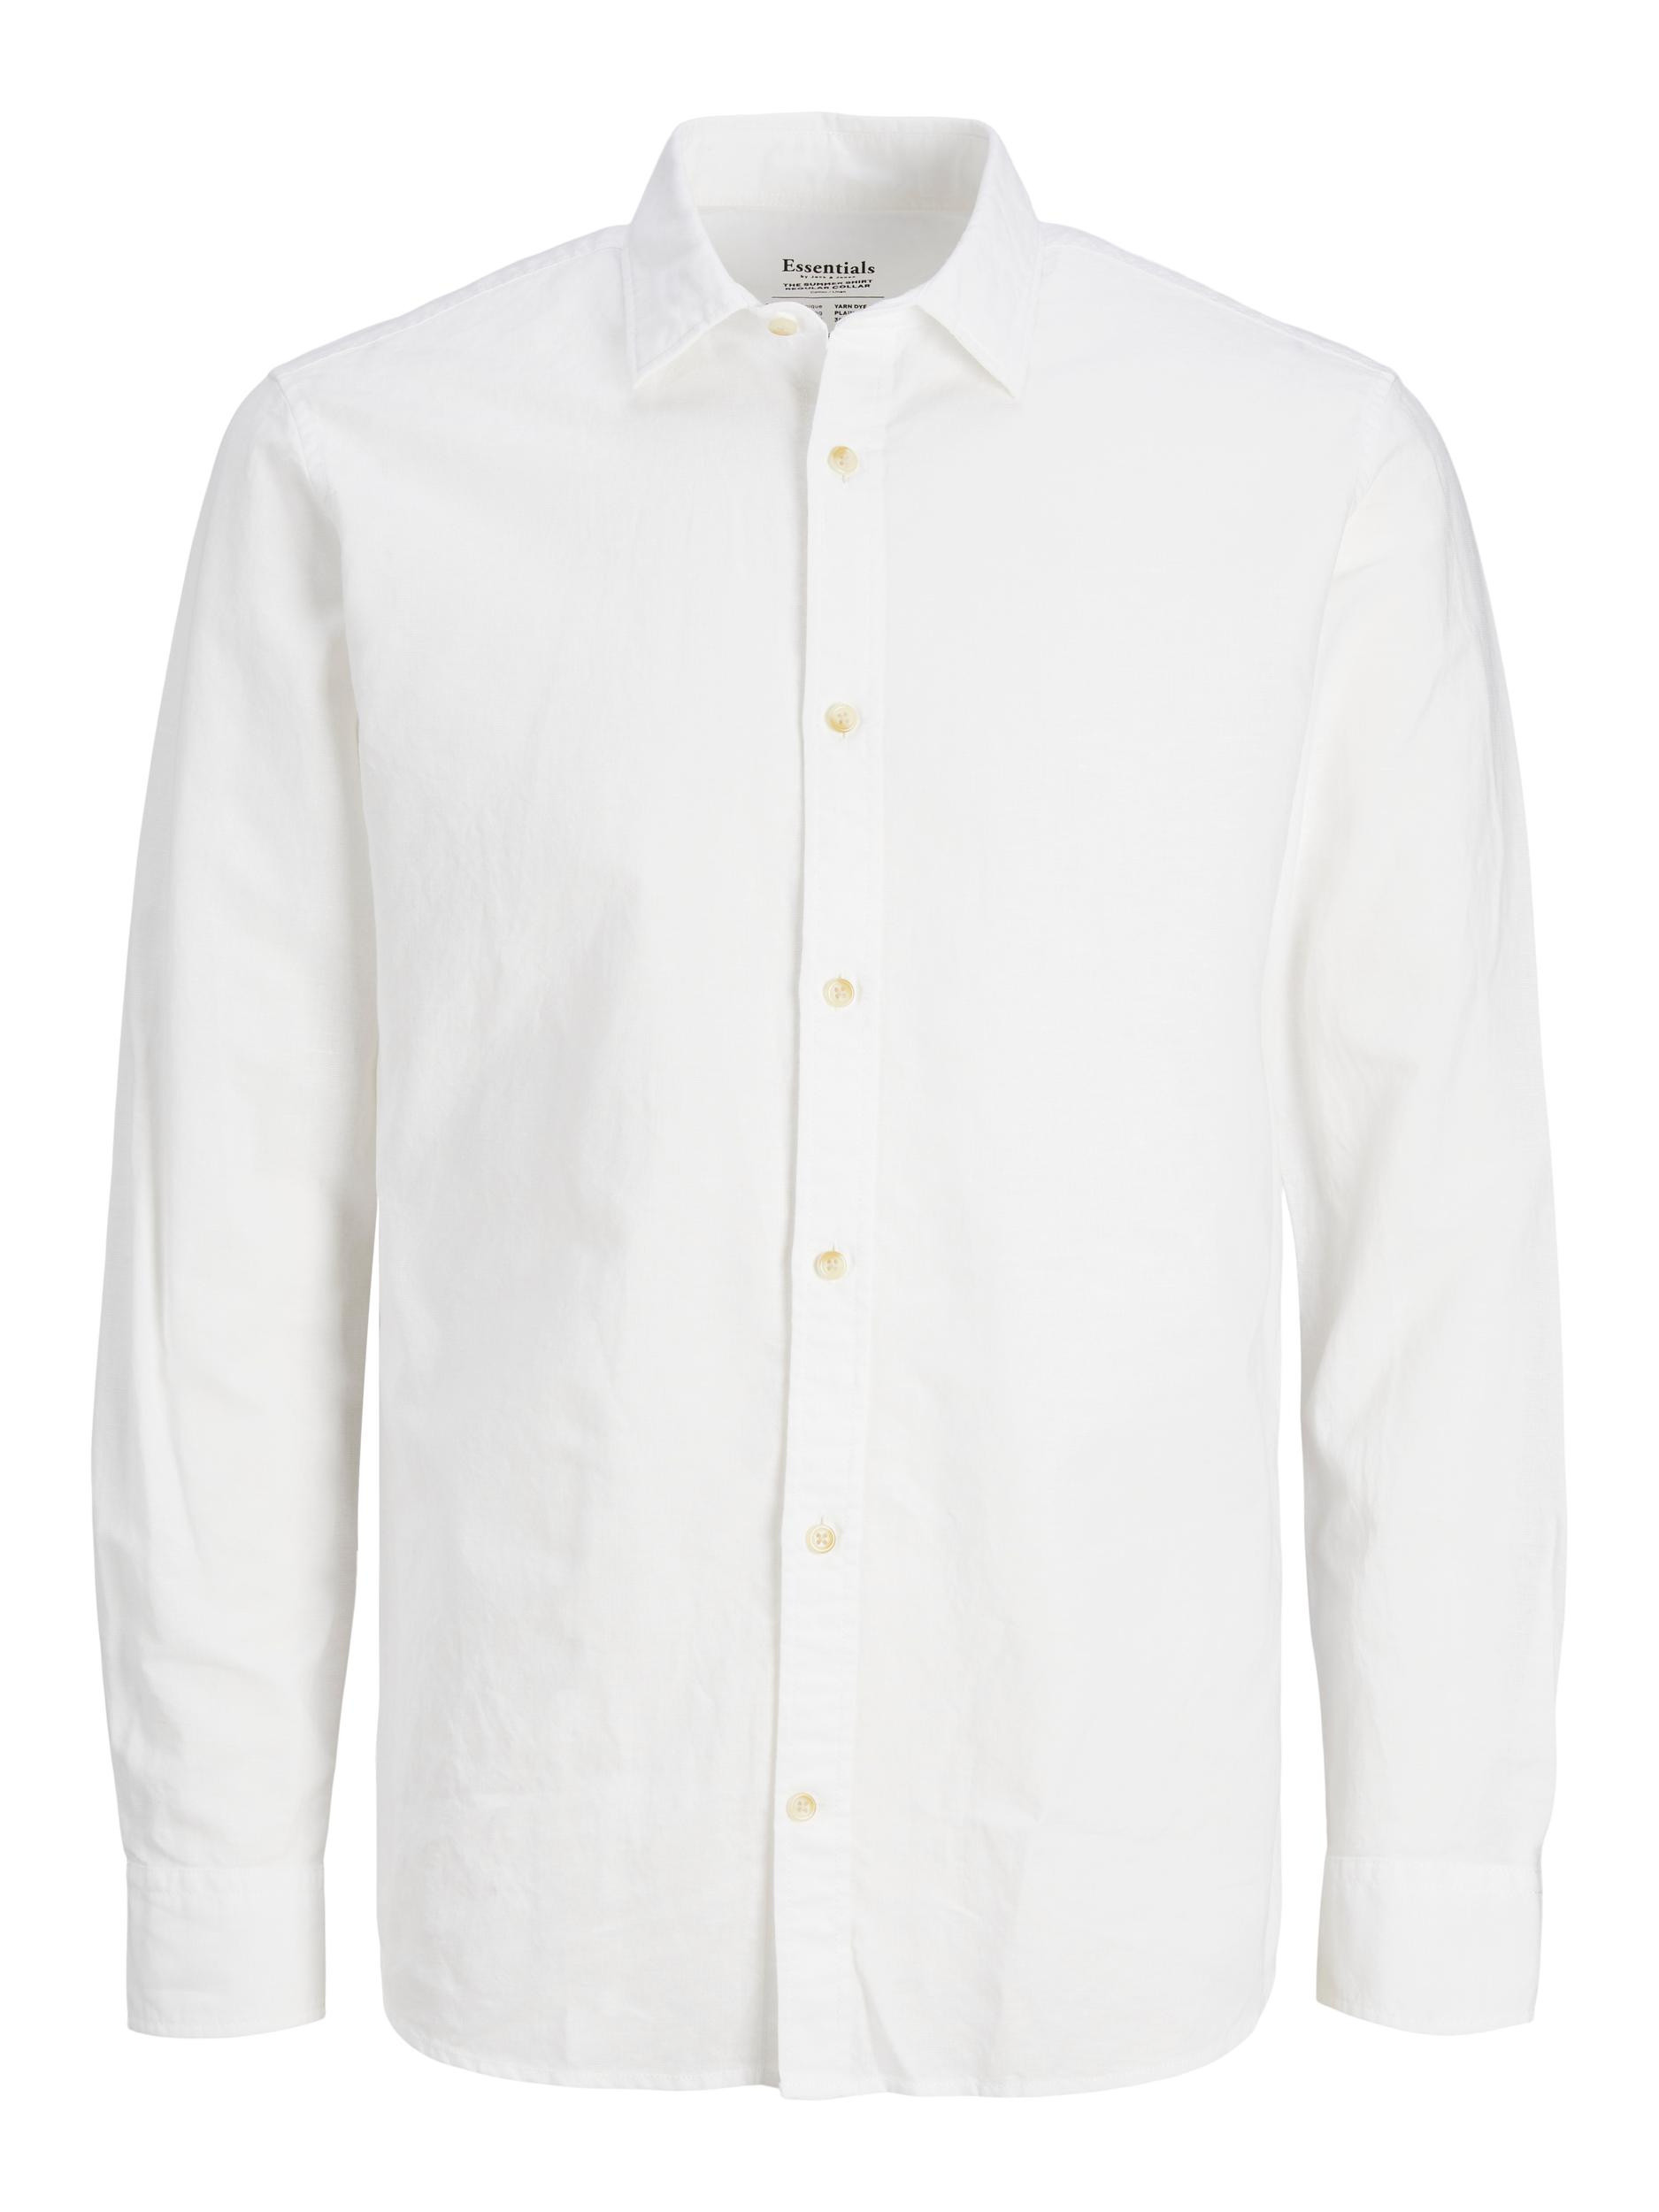 Jack & Jones - Slim fit shirt, White, large image number 0